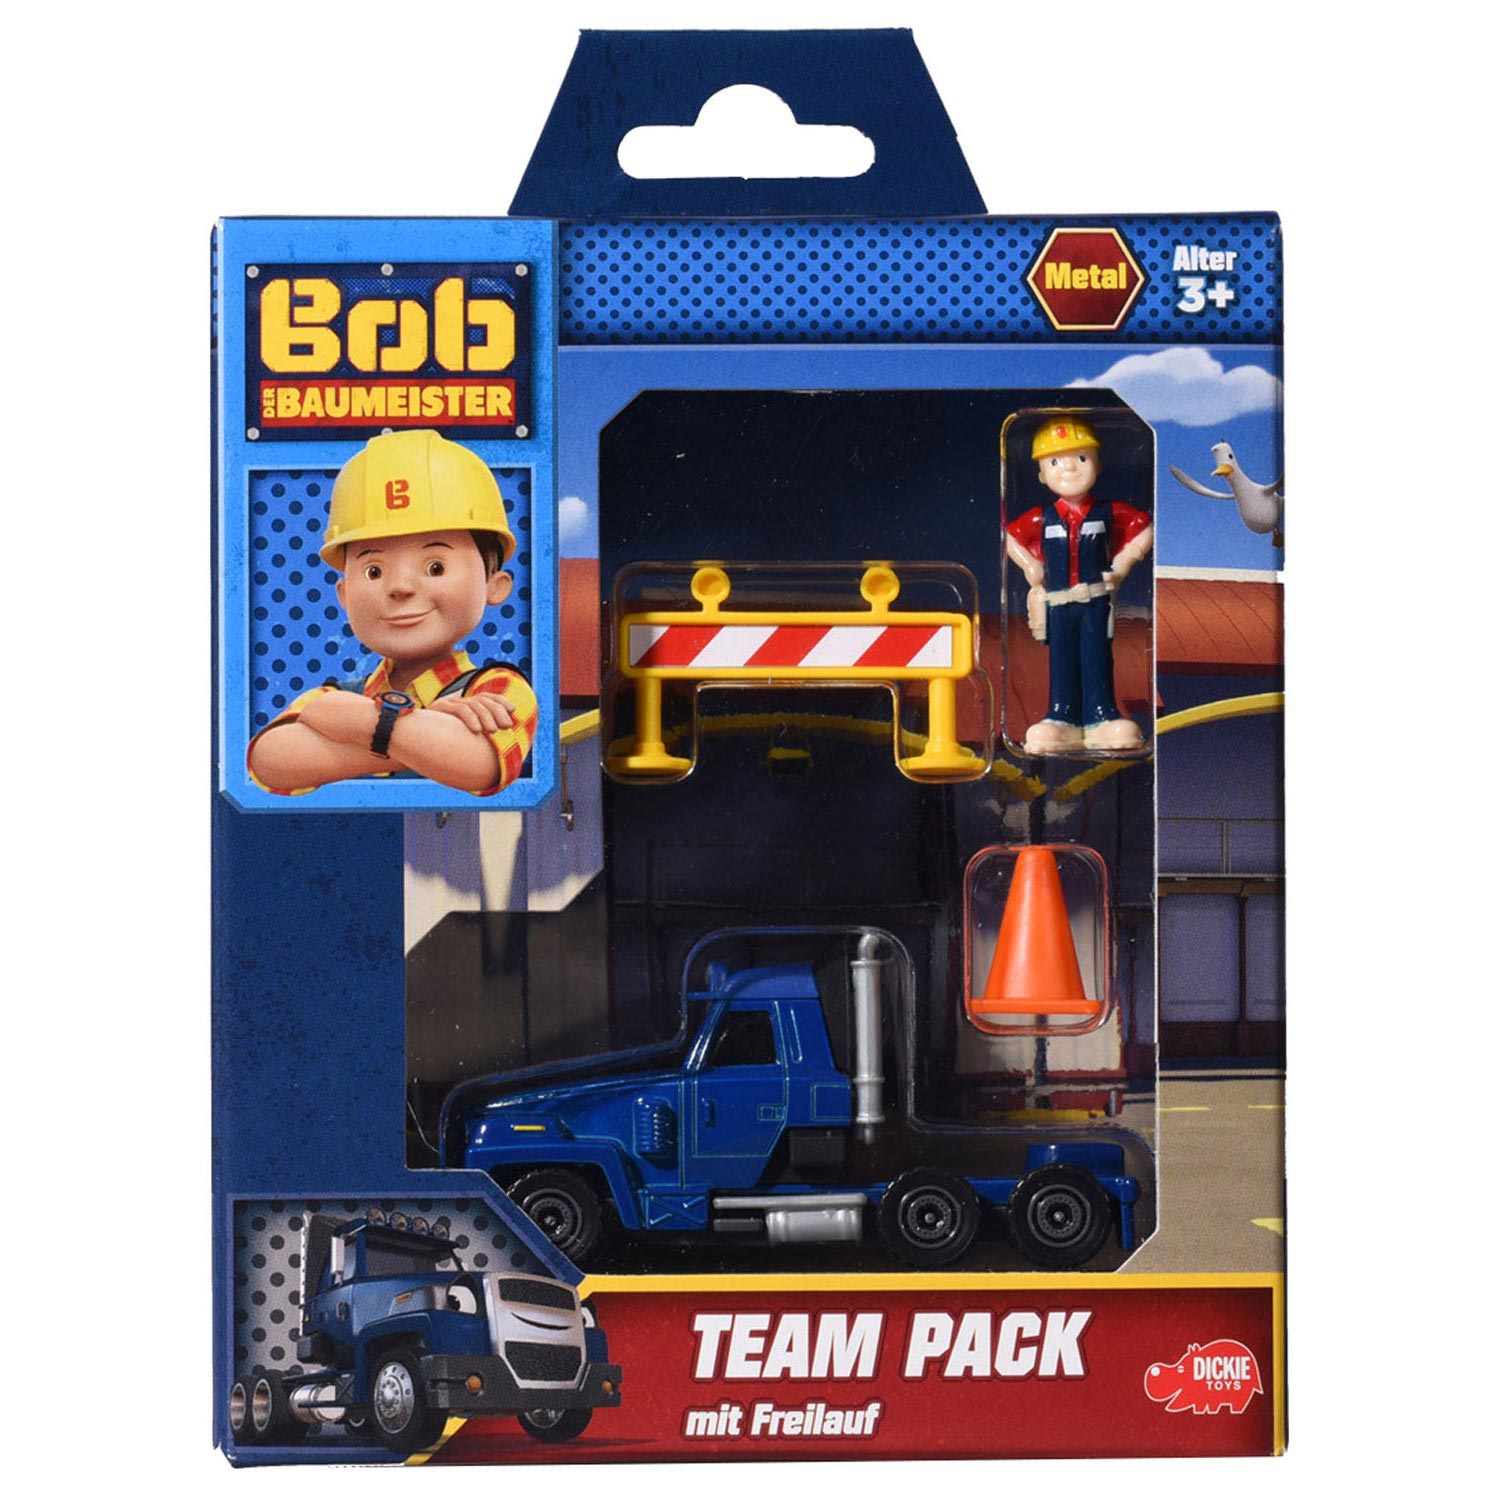 Dickie Bob the Builder - Ensemble de jeu de garage